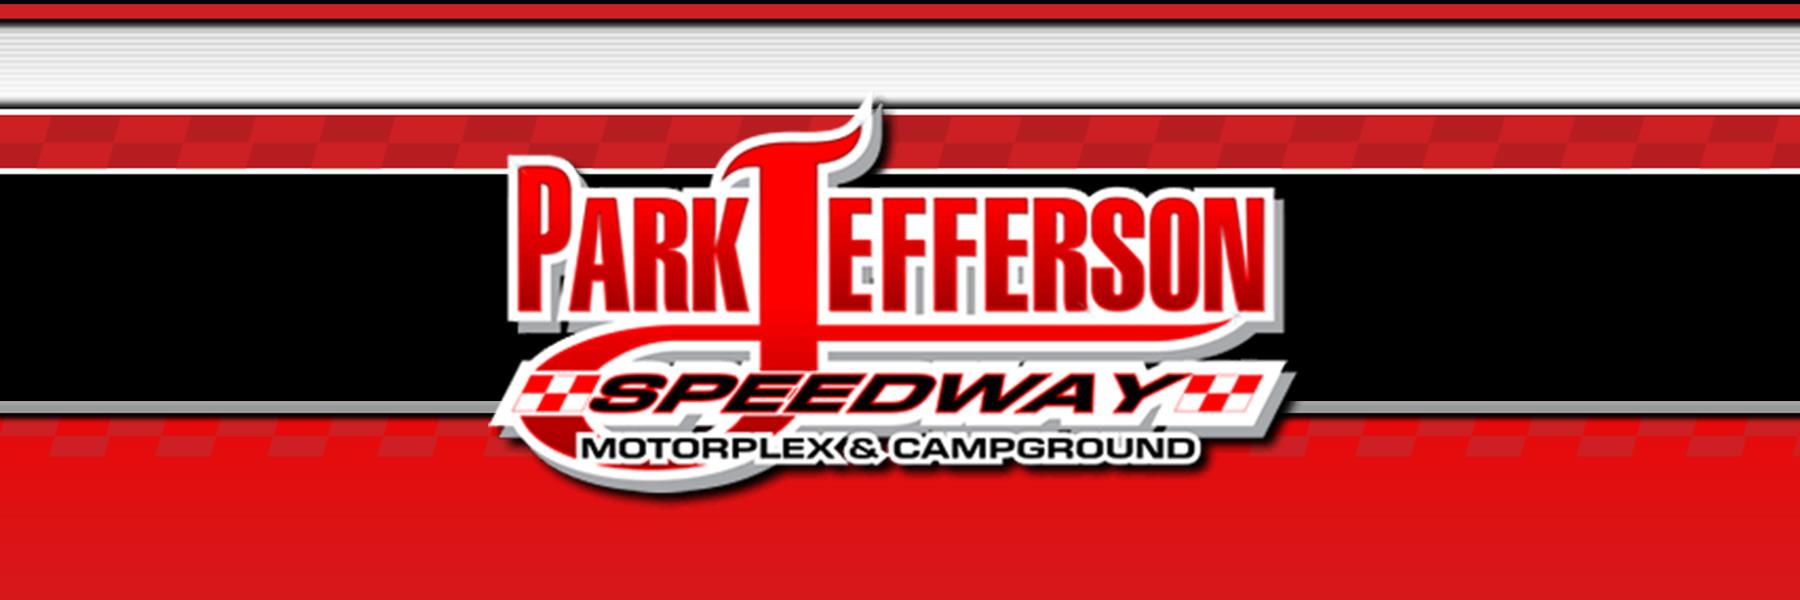 6/11/2016 - Park Jefferson International Speedway